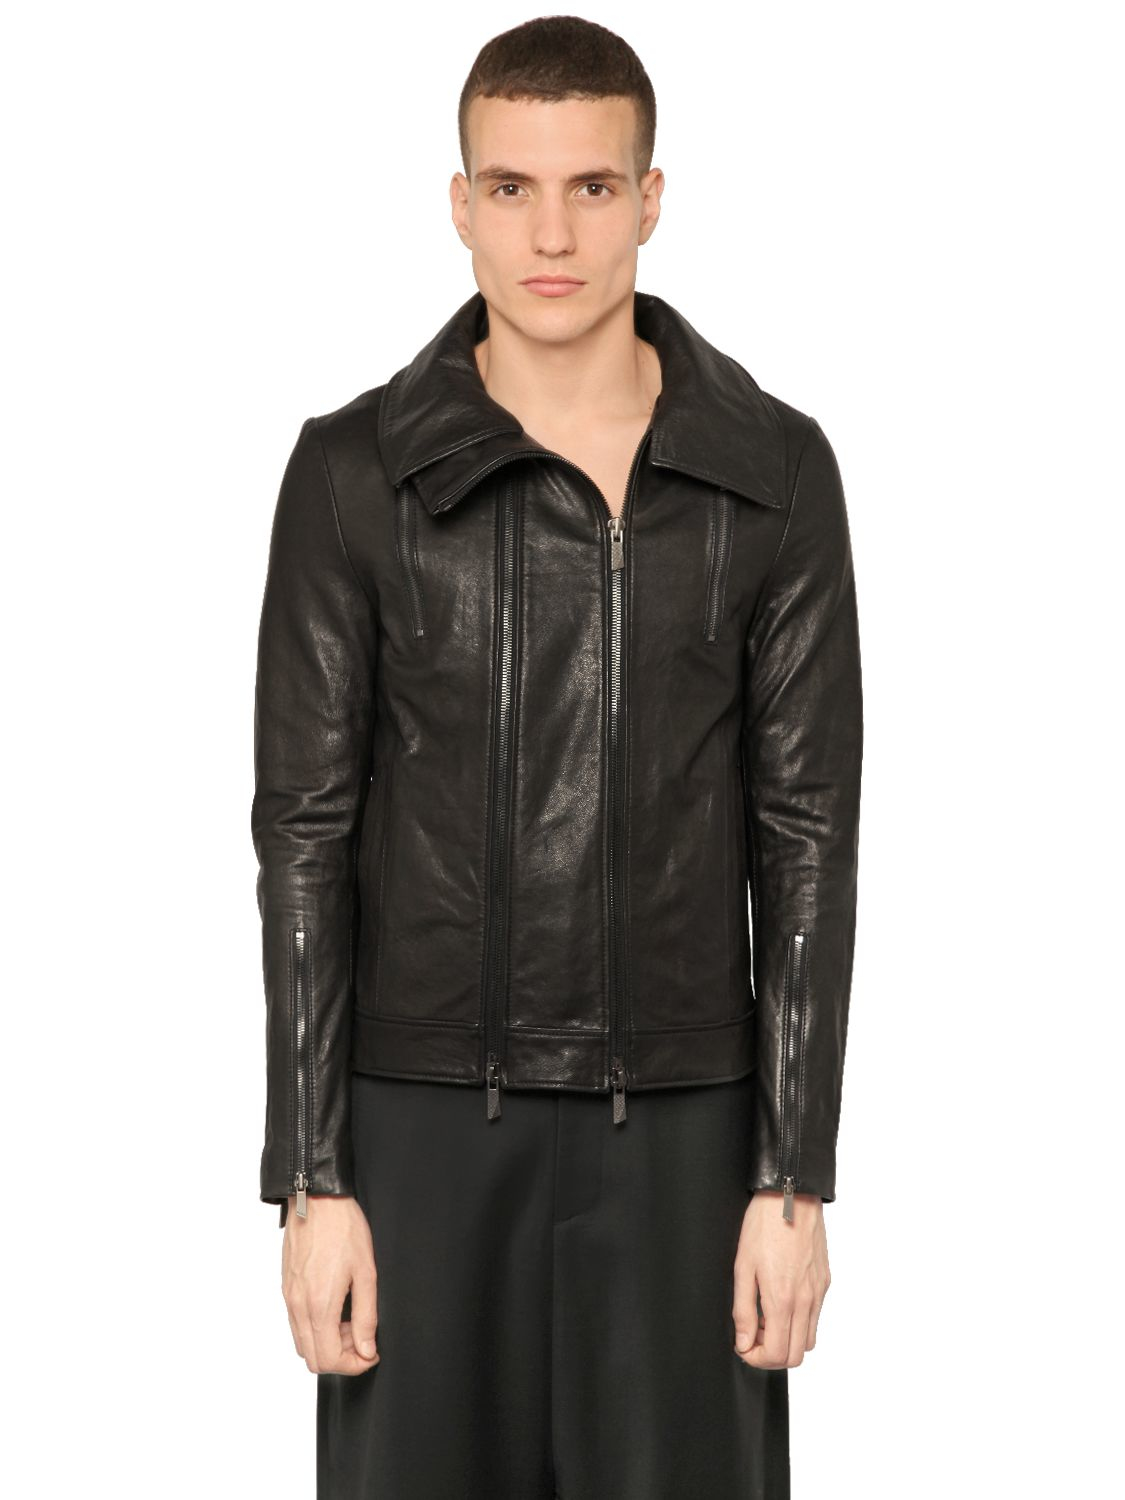 Lyst - D.Gnak High Collar Leather Biker Jacket in Black for Men